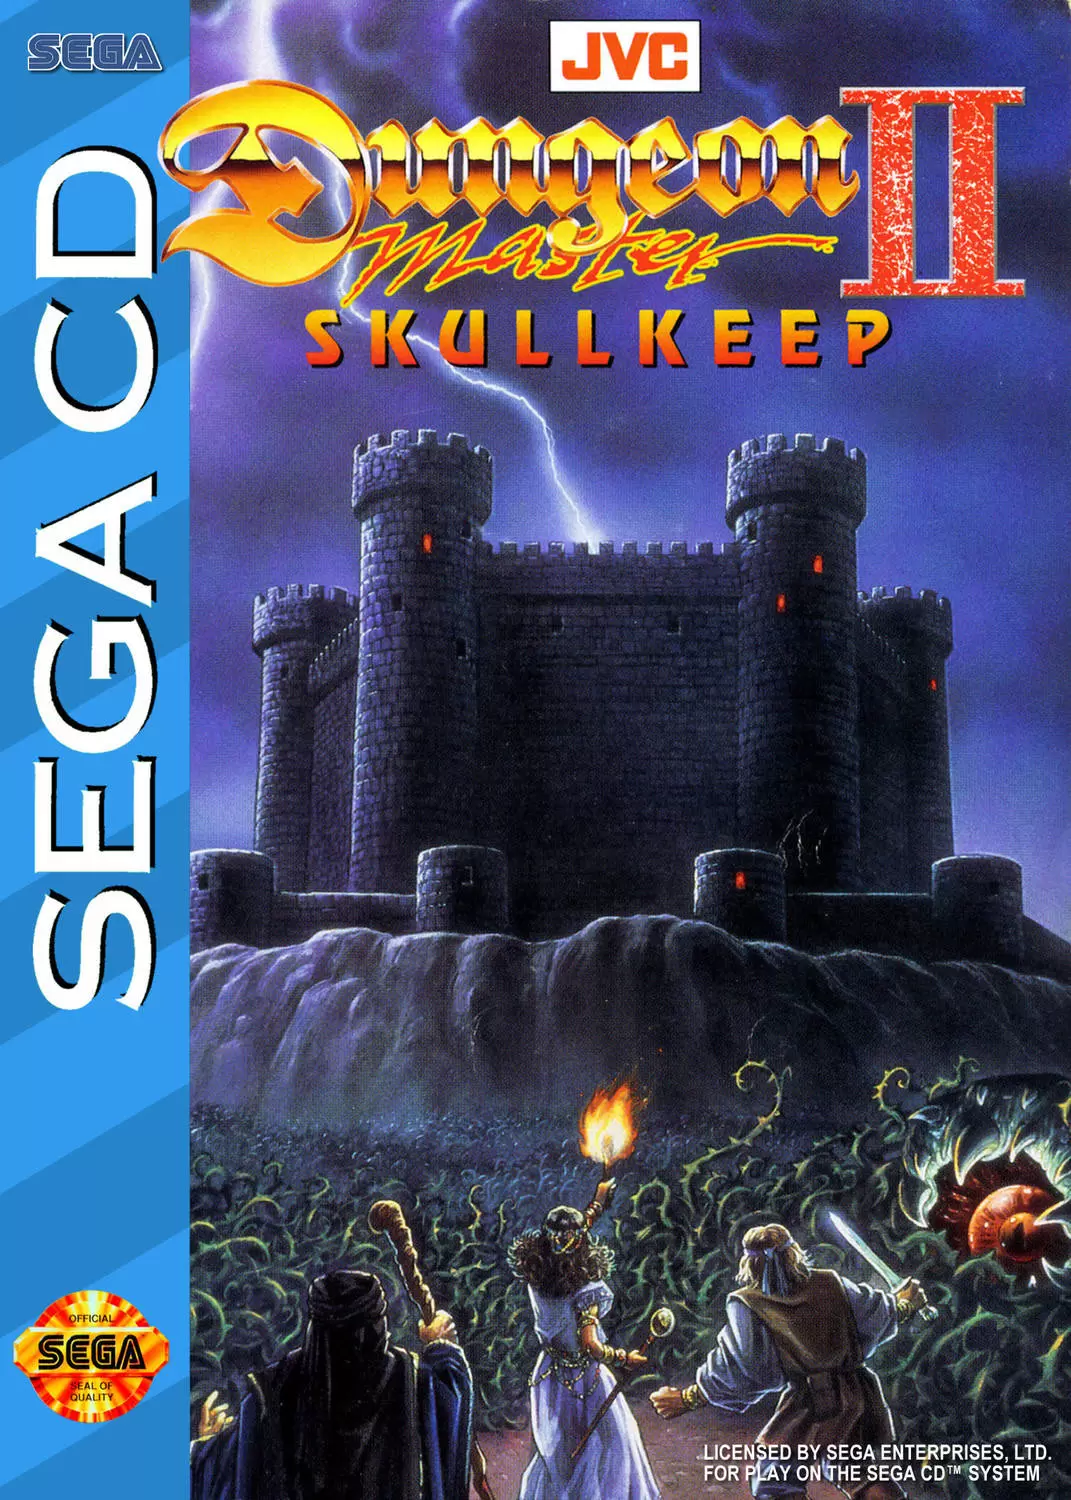 Jeux SEGA Mega CD - Dungeon Master II: Skullkeep